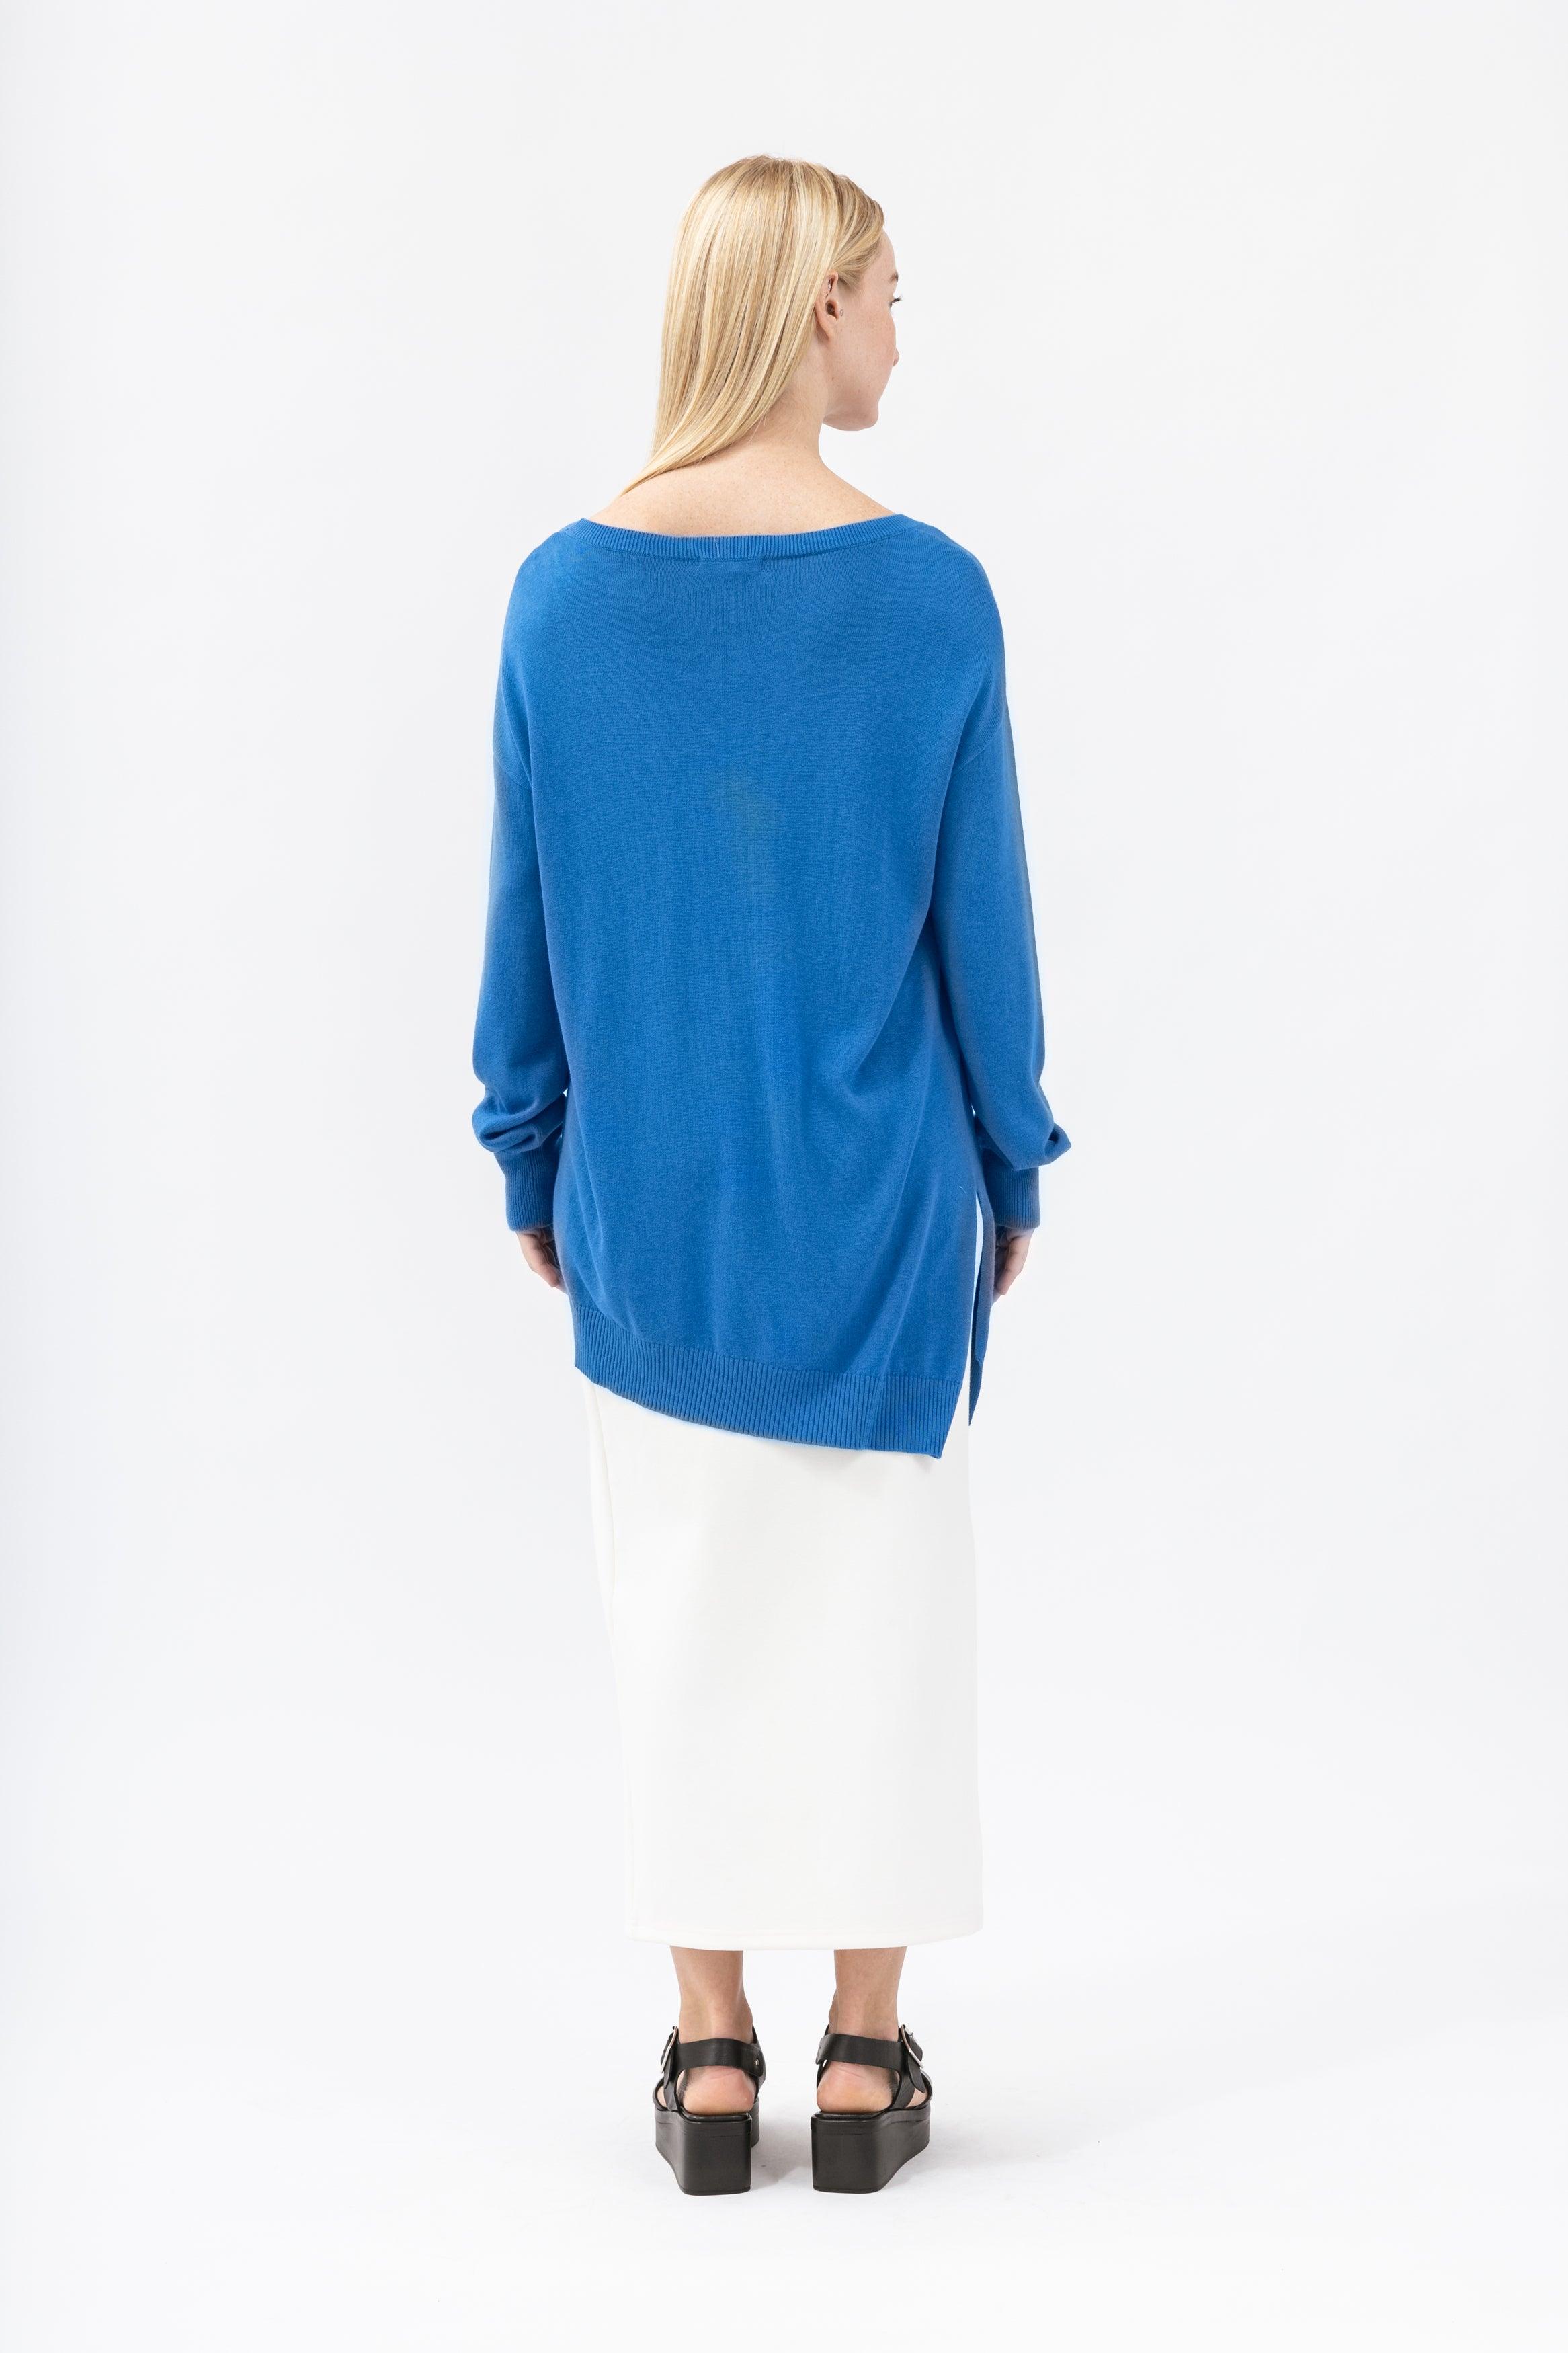 Women's Asymmetric Sweater - NOT LABELED